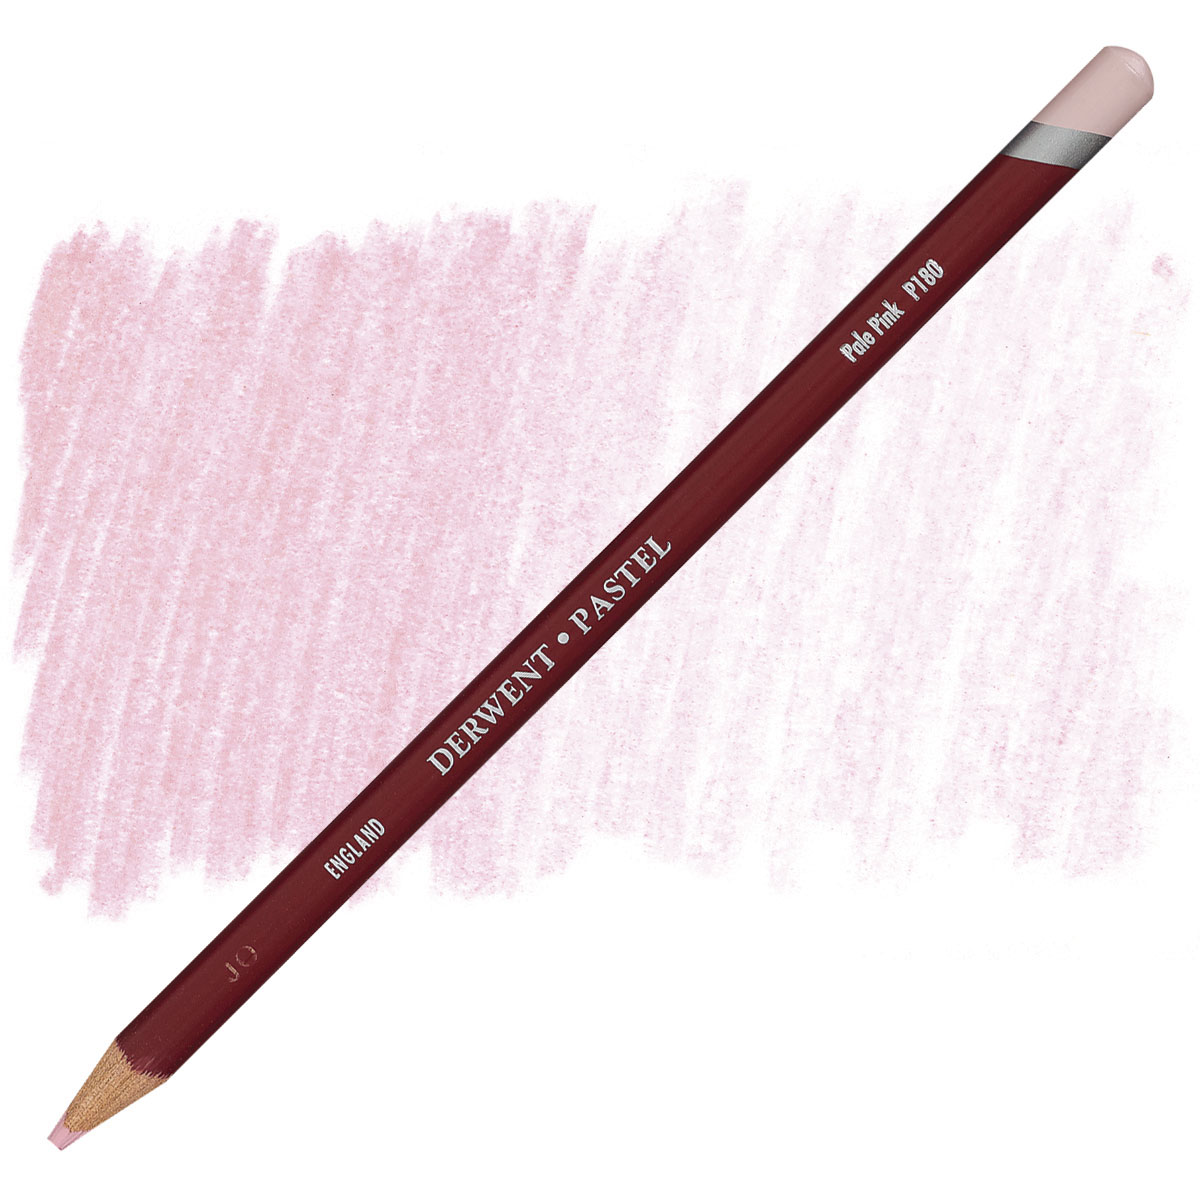 Derwent Pastel Pencils & Sets